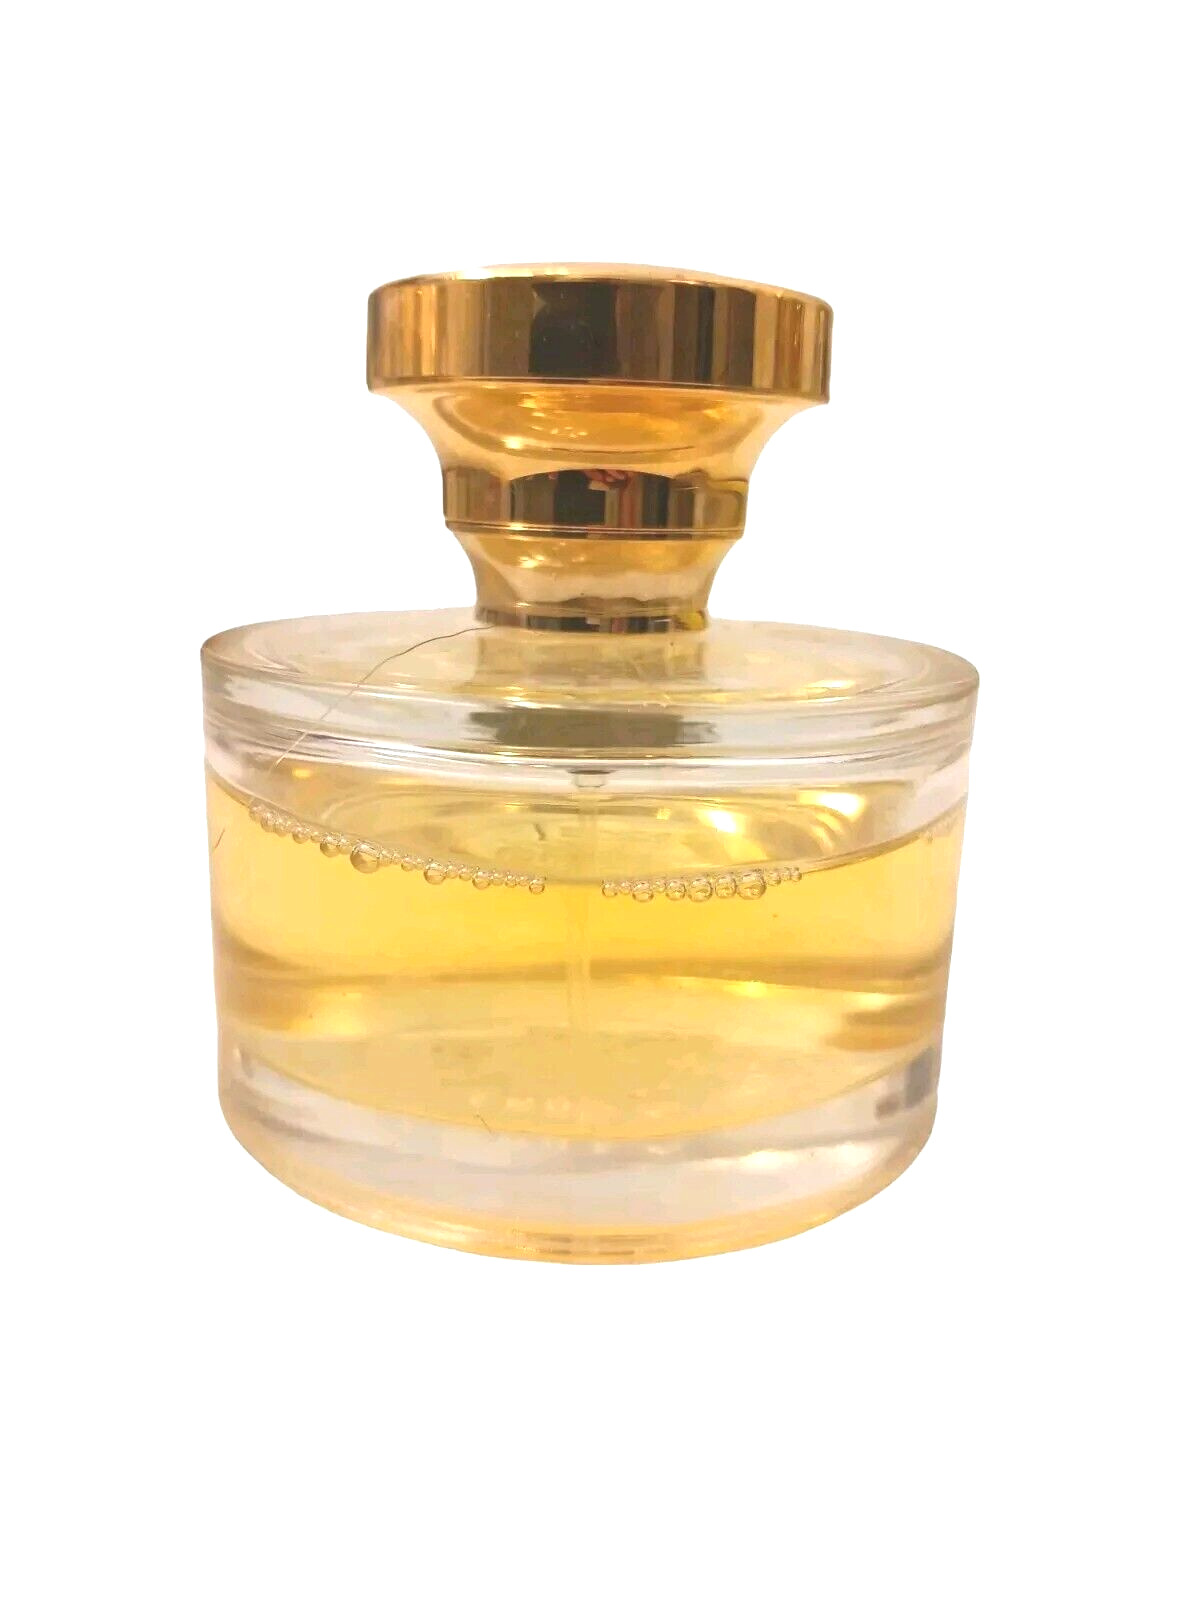 Ralph Lauren GLAMOUROUS Eau de Parfum  1.7 oz Natural Spray 95% FULL Original